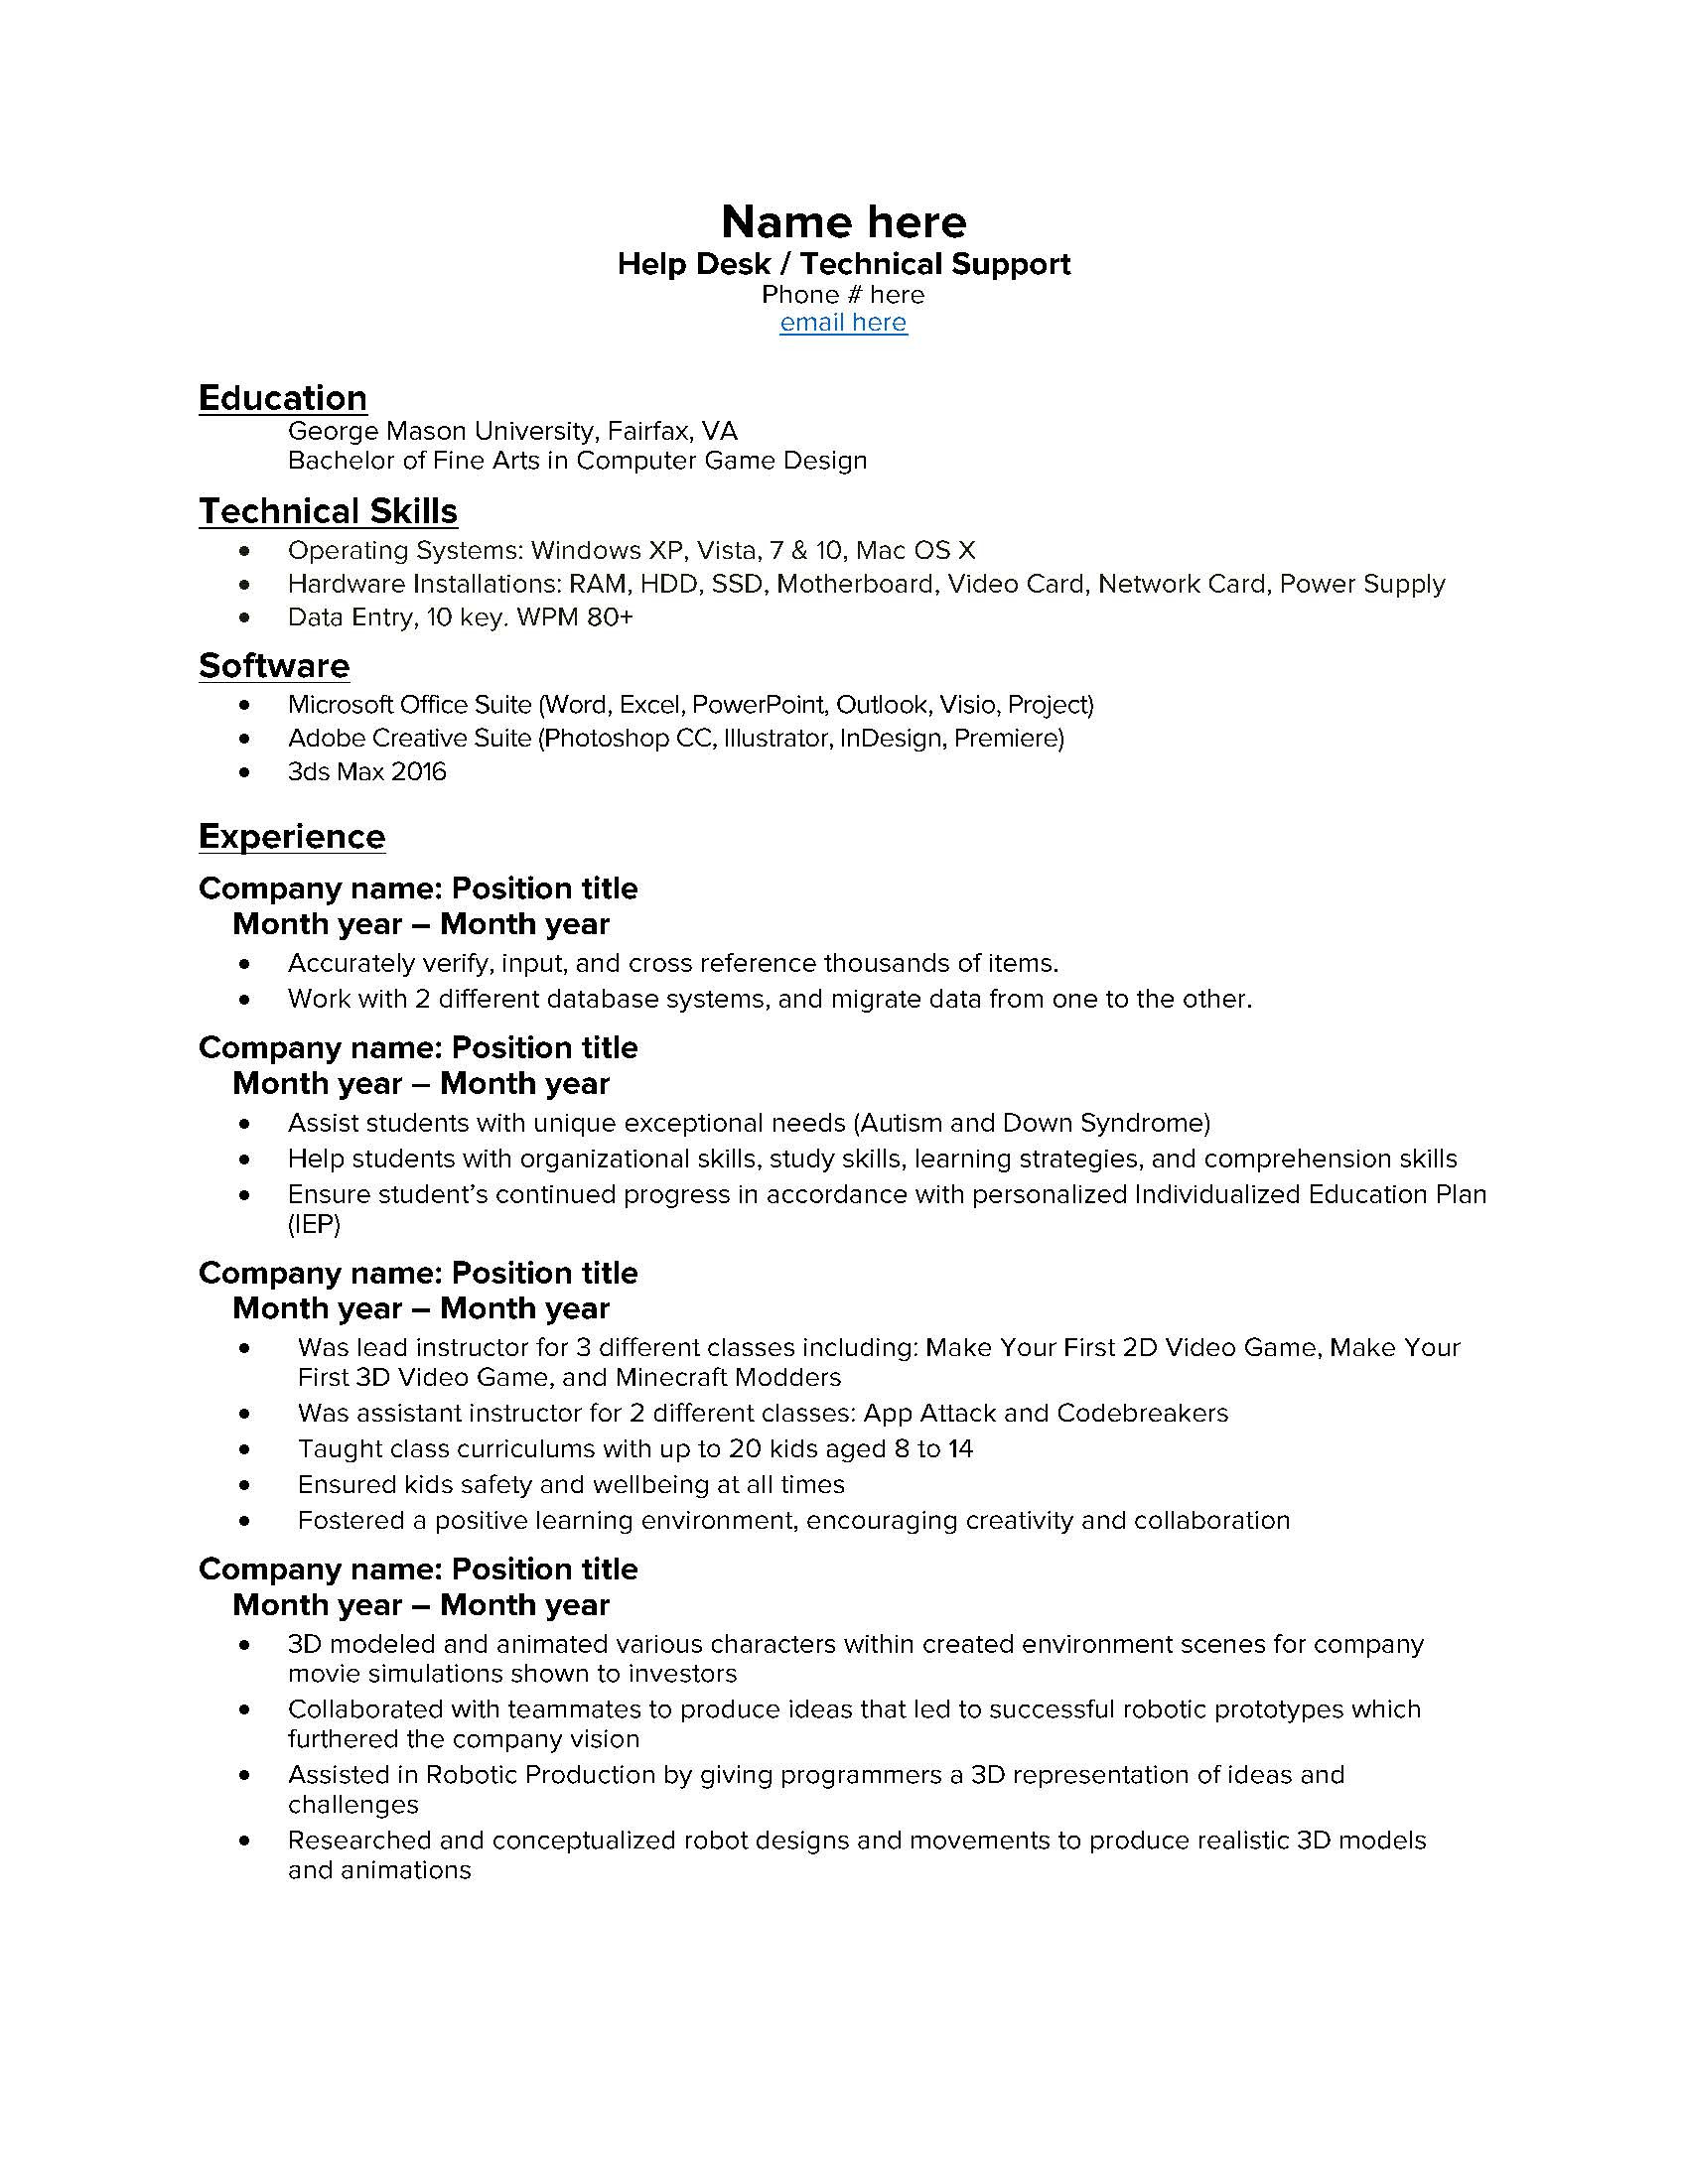 Sample Helpdesk Technician Level 1 Resumes Entry Level Help Desk Resume : R/resumes